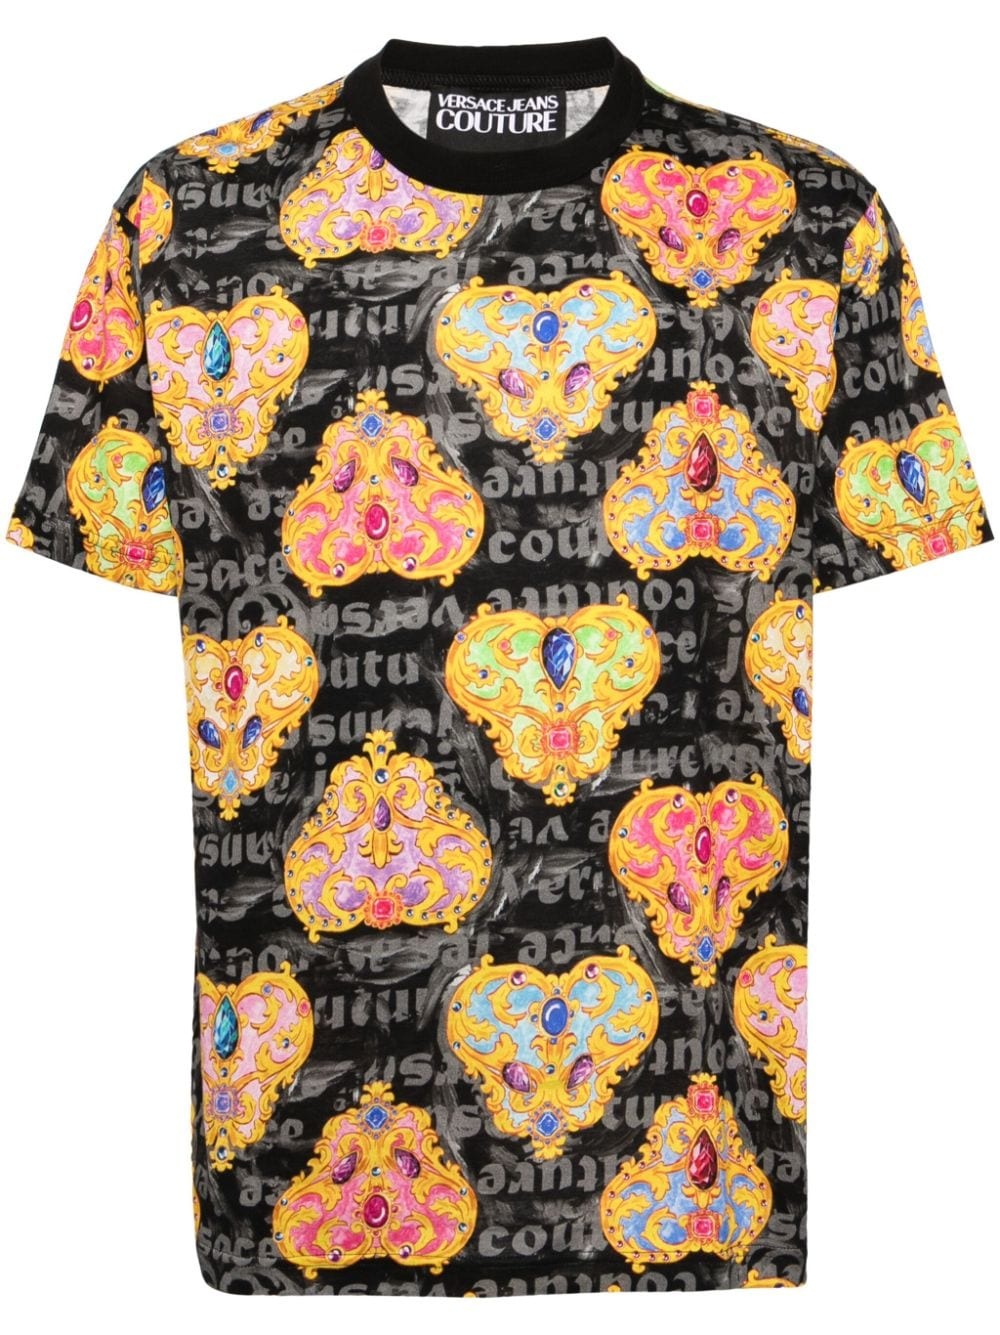 Heart Couture cotton T-shirt - 1